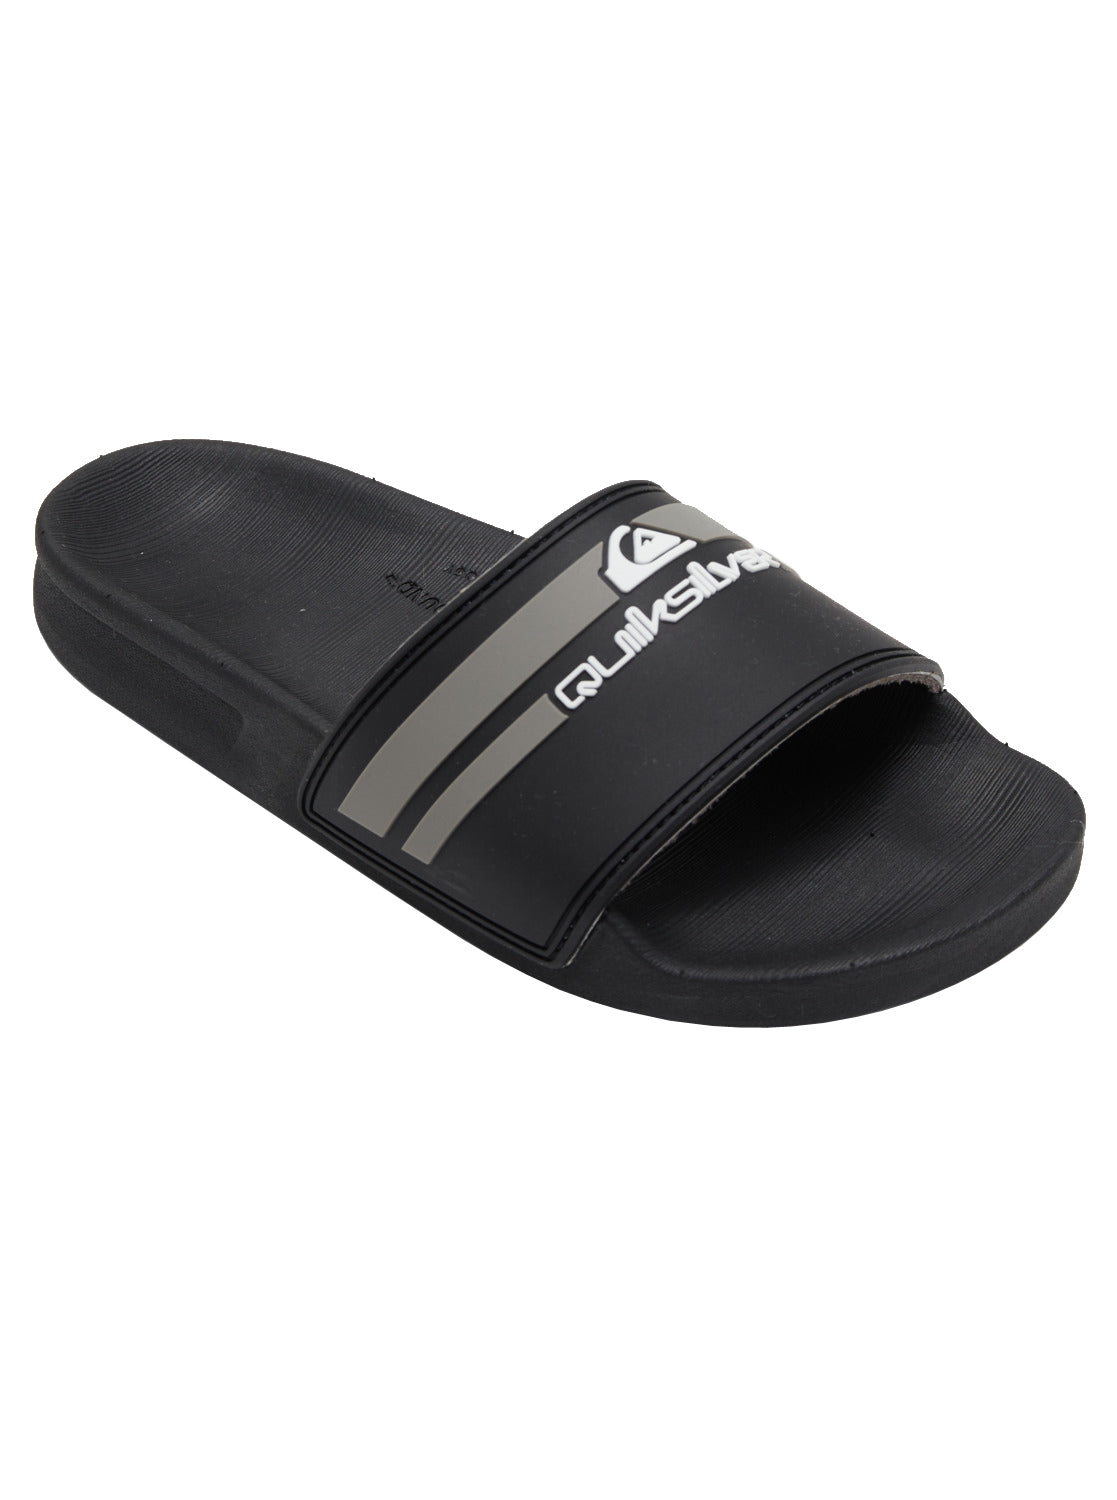 Quiksilver Rivi Slide Youth Sandal XKSK-Black-Grey-Black 11 C